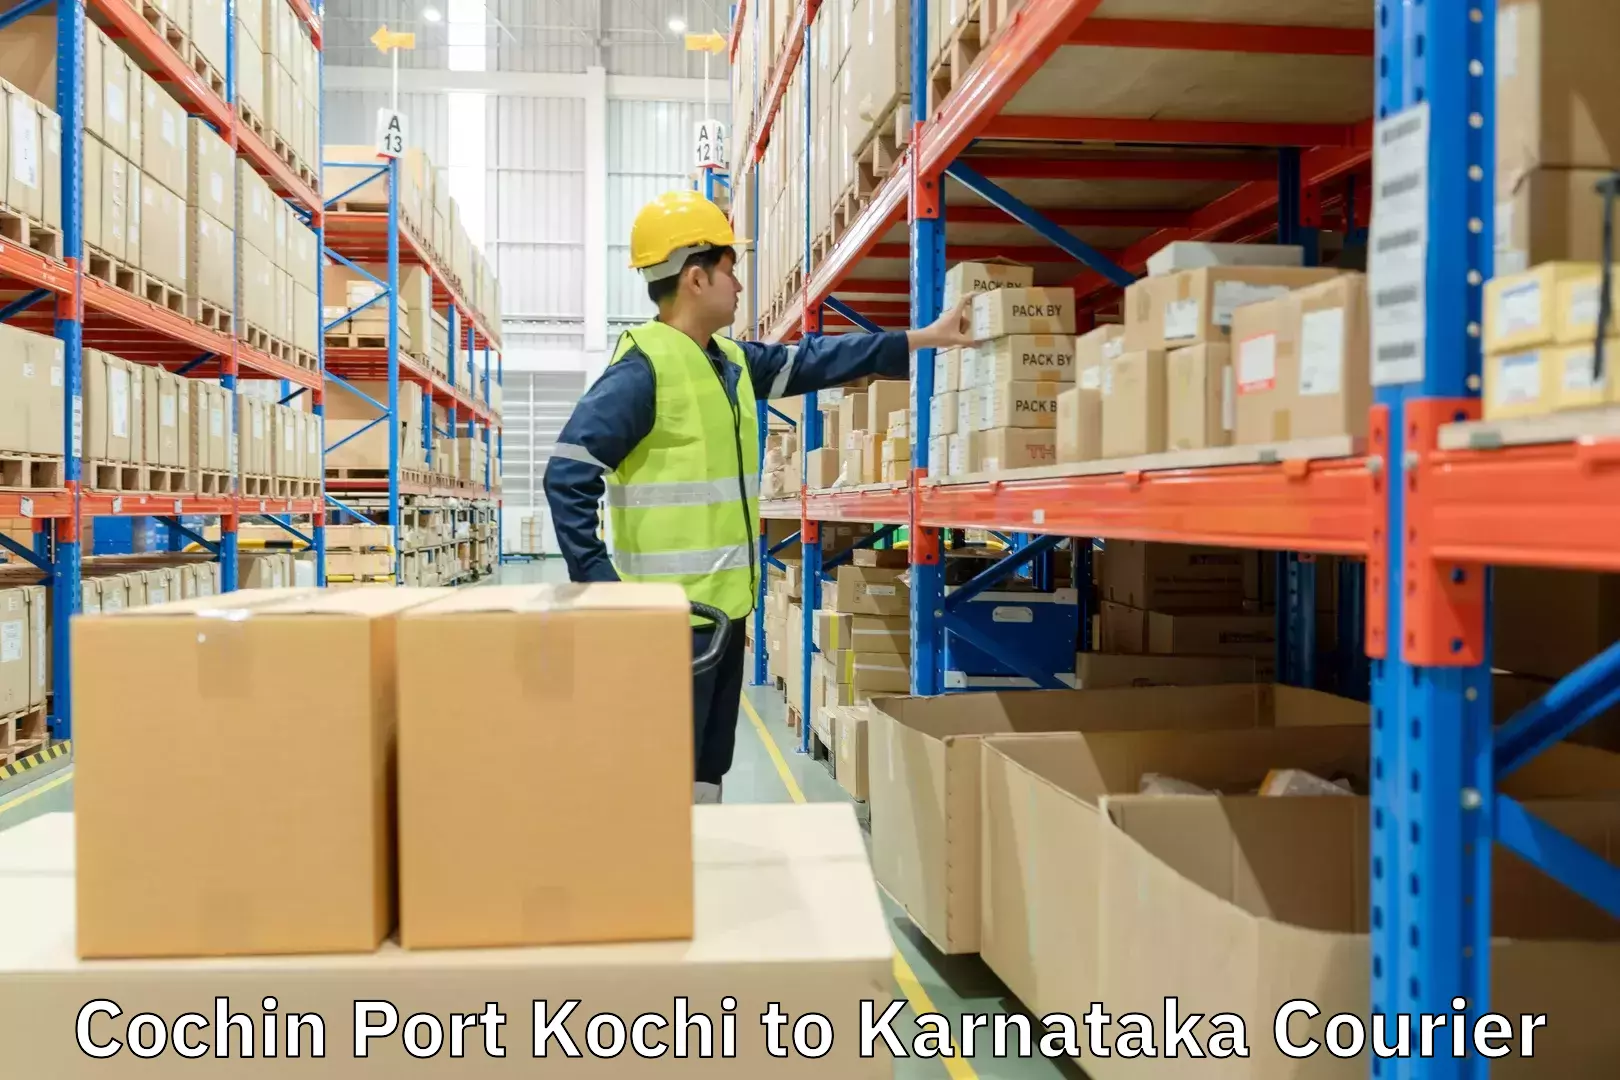 Courier service booking Cochin Port Kochi to Karnataka